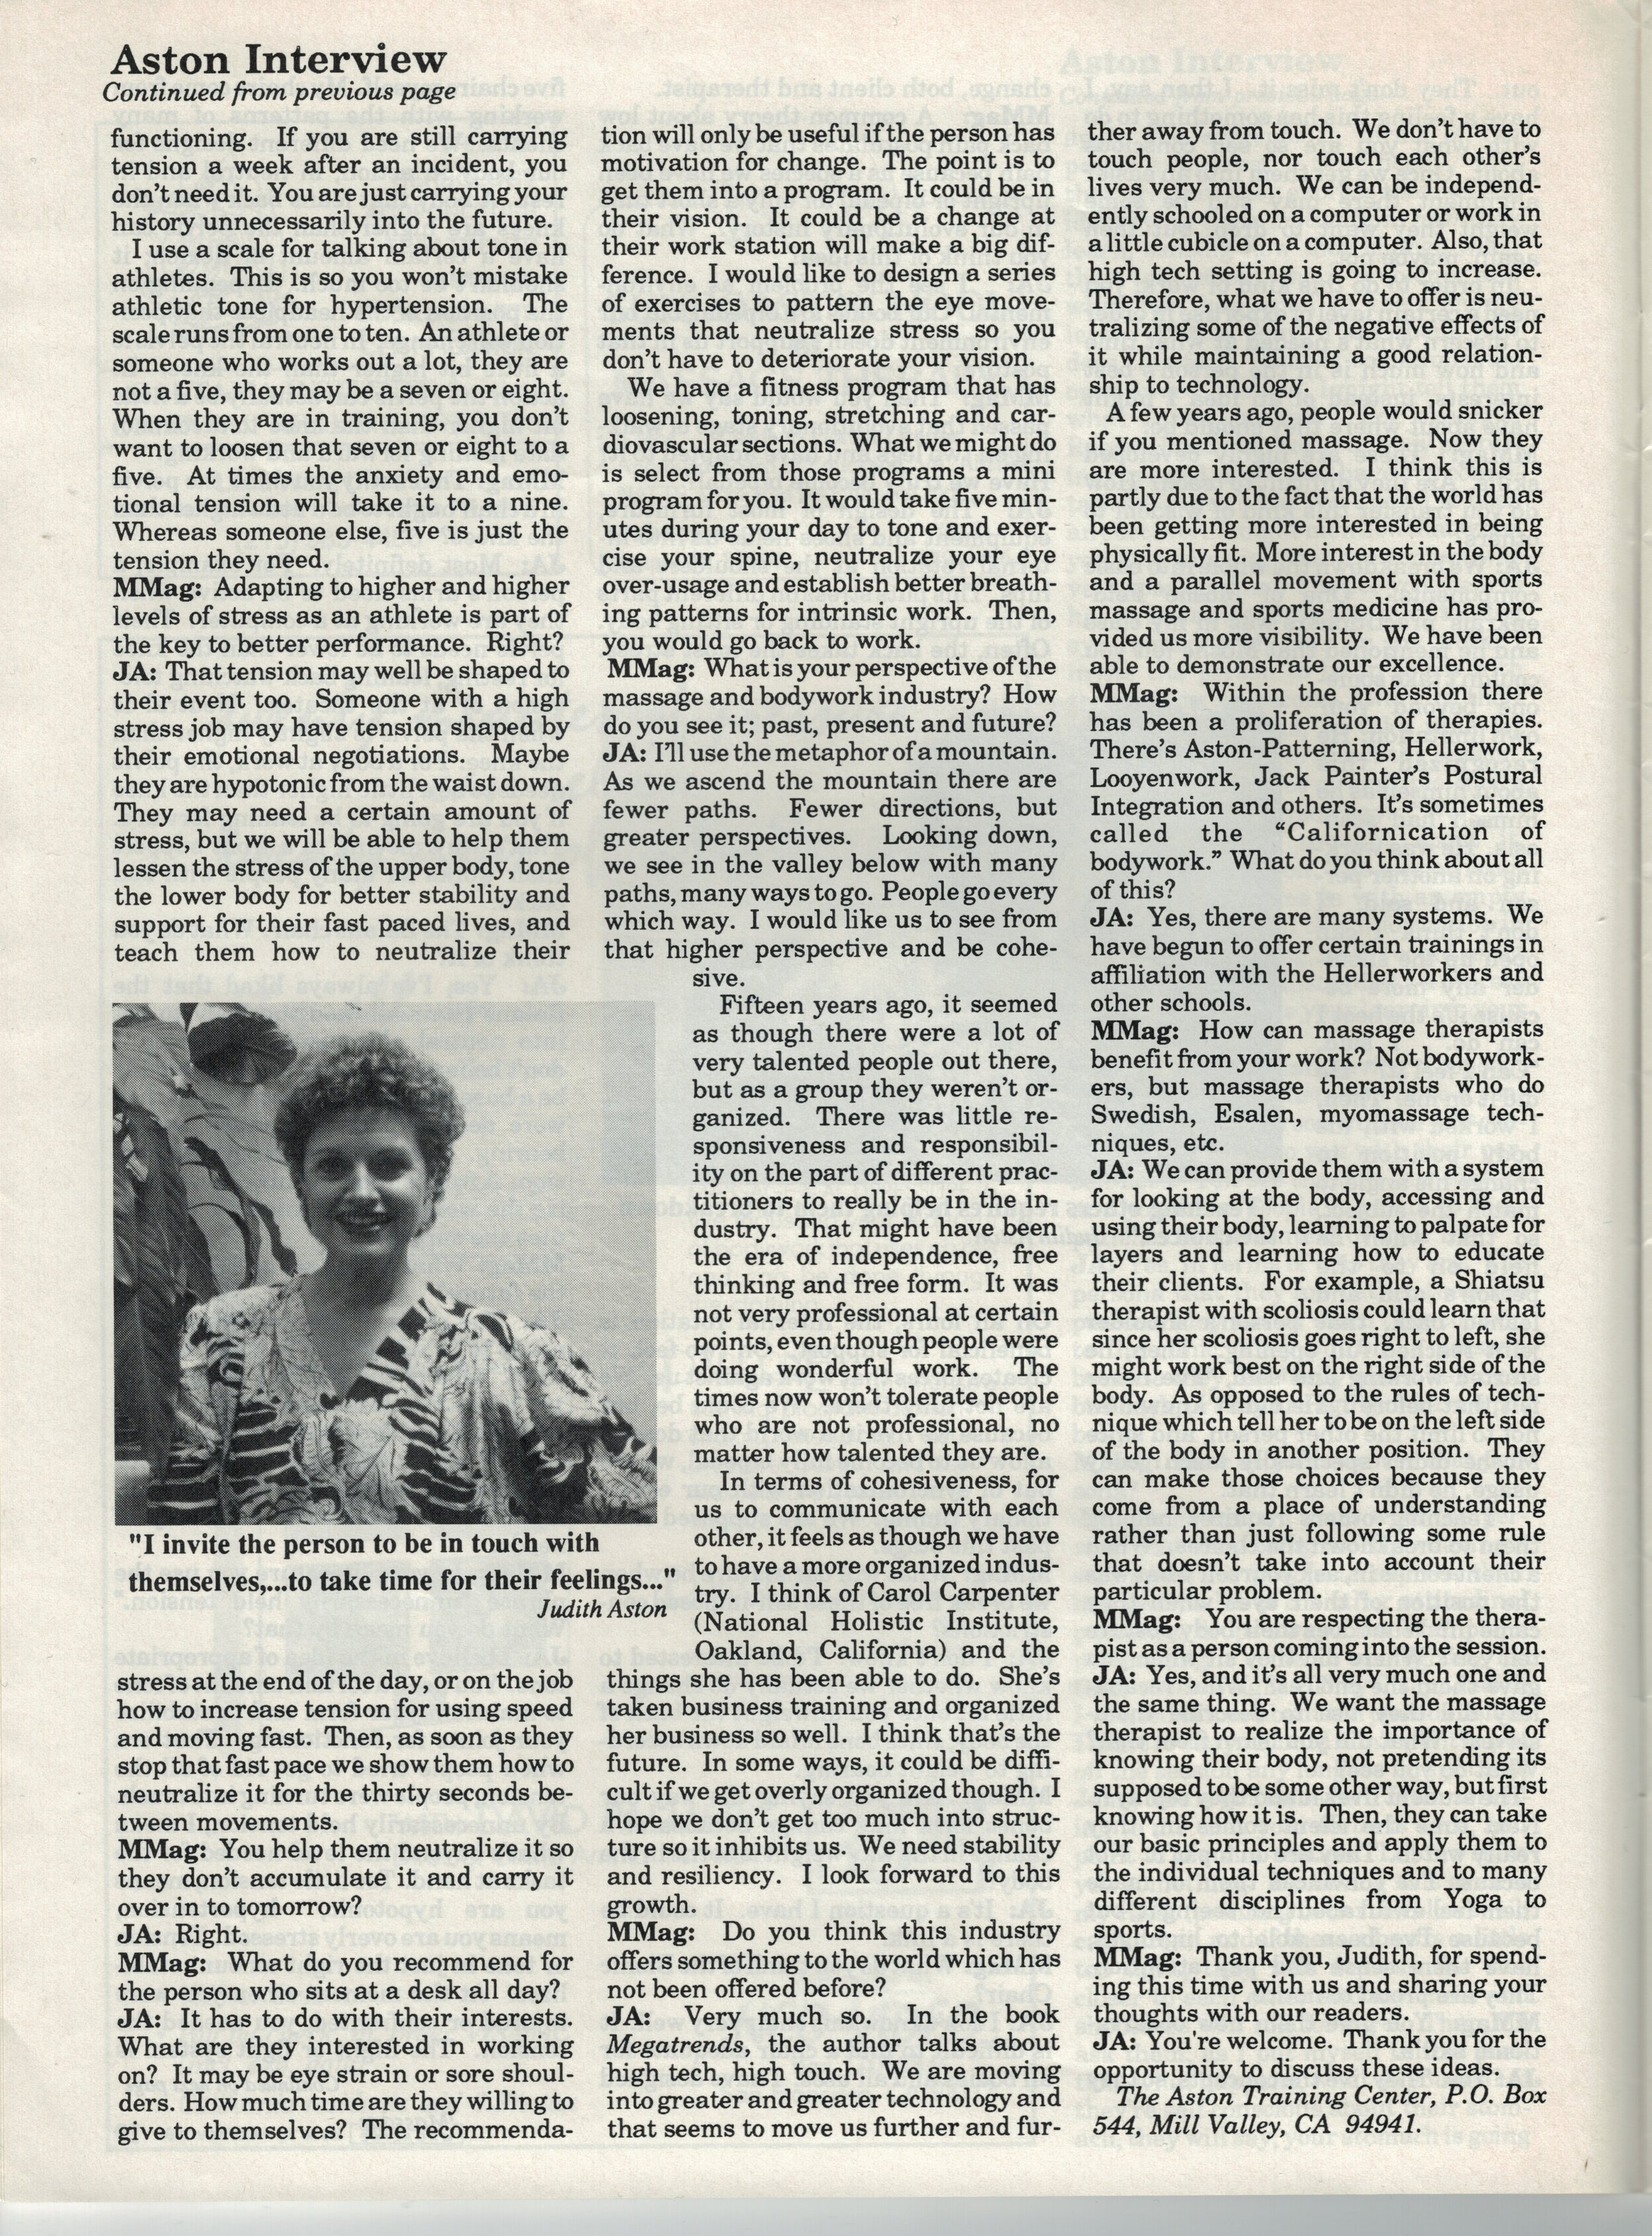 Massage Magazine Article Oct:Nov 1988 Issue 16 pg 8.jpeg